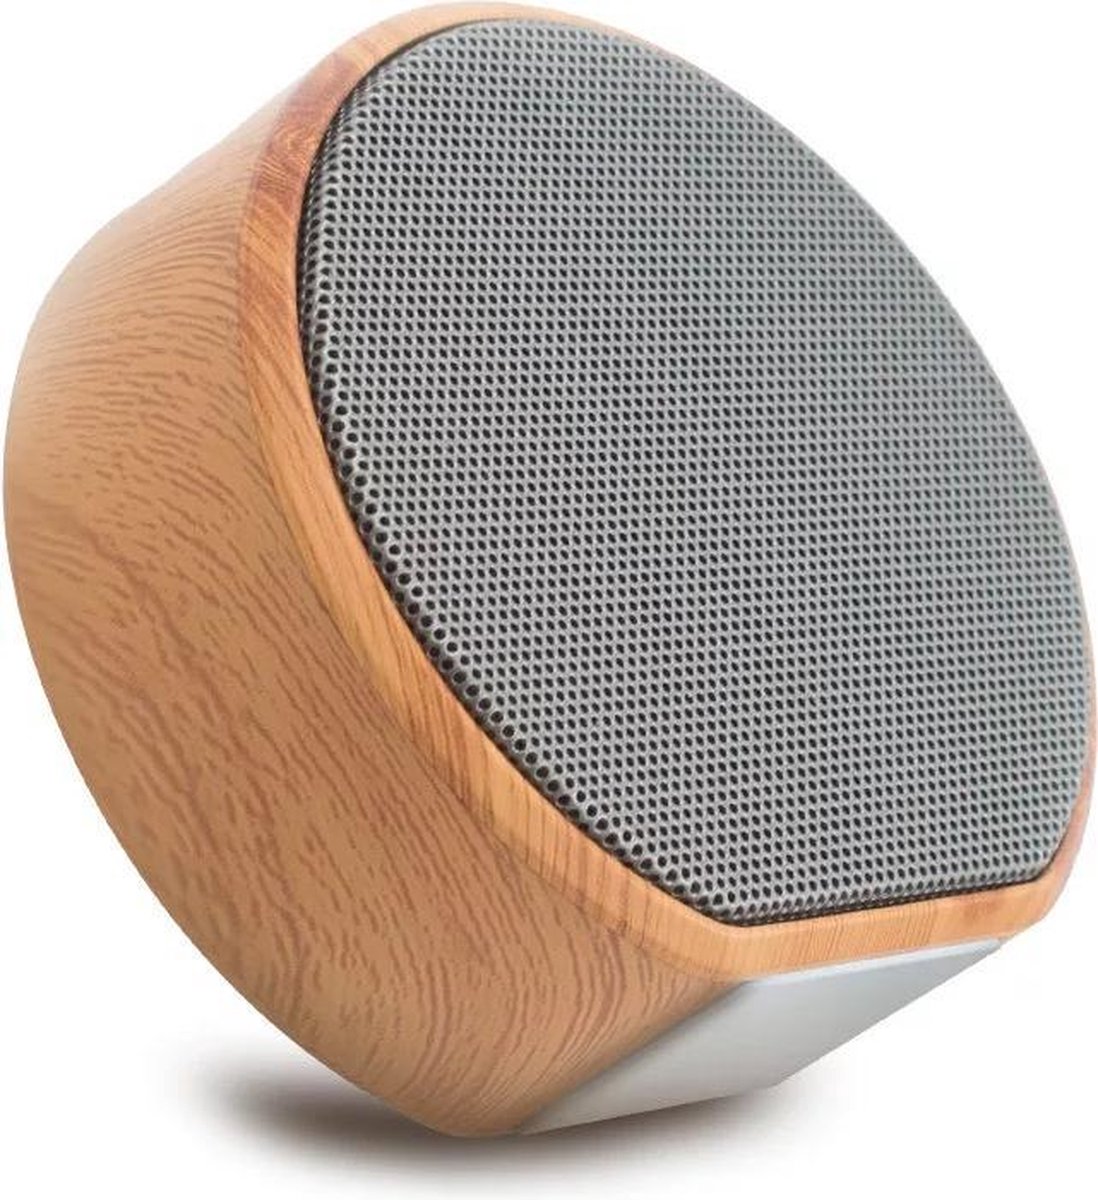 Woodsound bluetooth speaker - speakers - draadloze bluetooth speaker - muziek box bluetooth